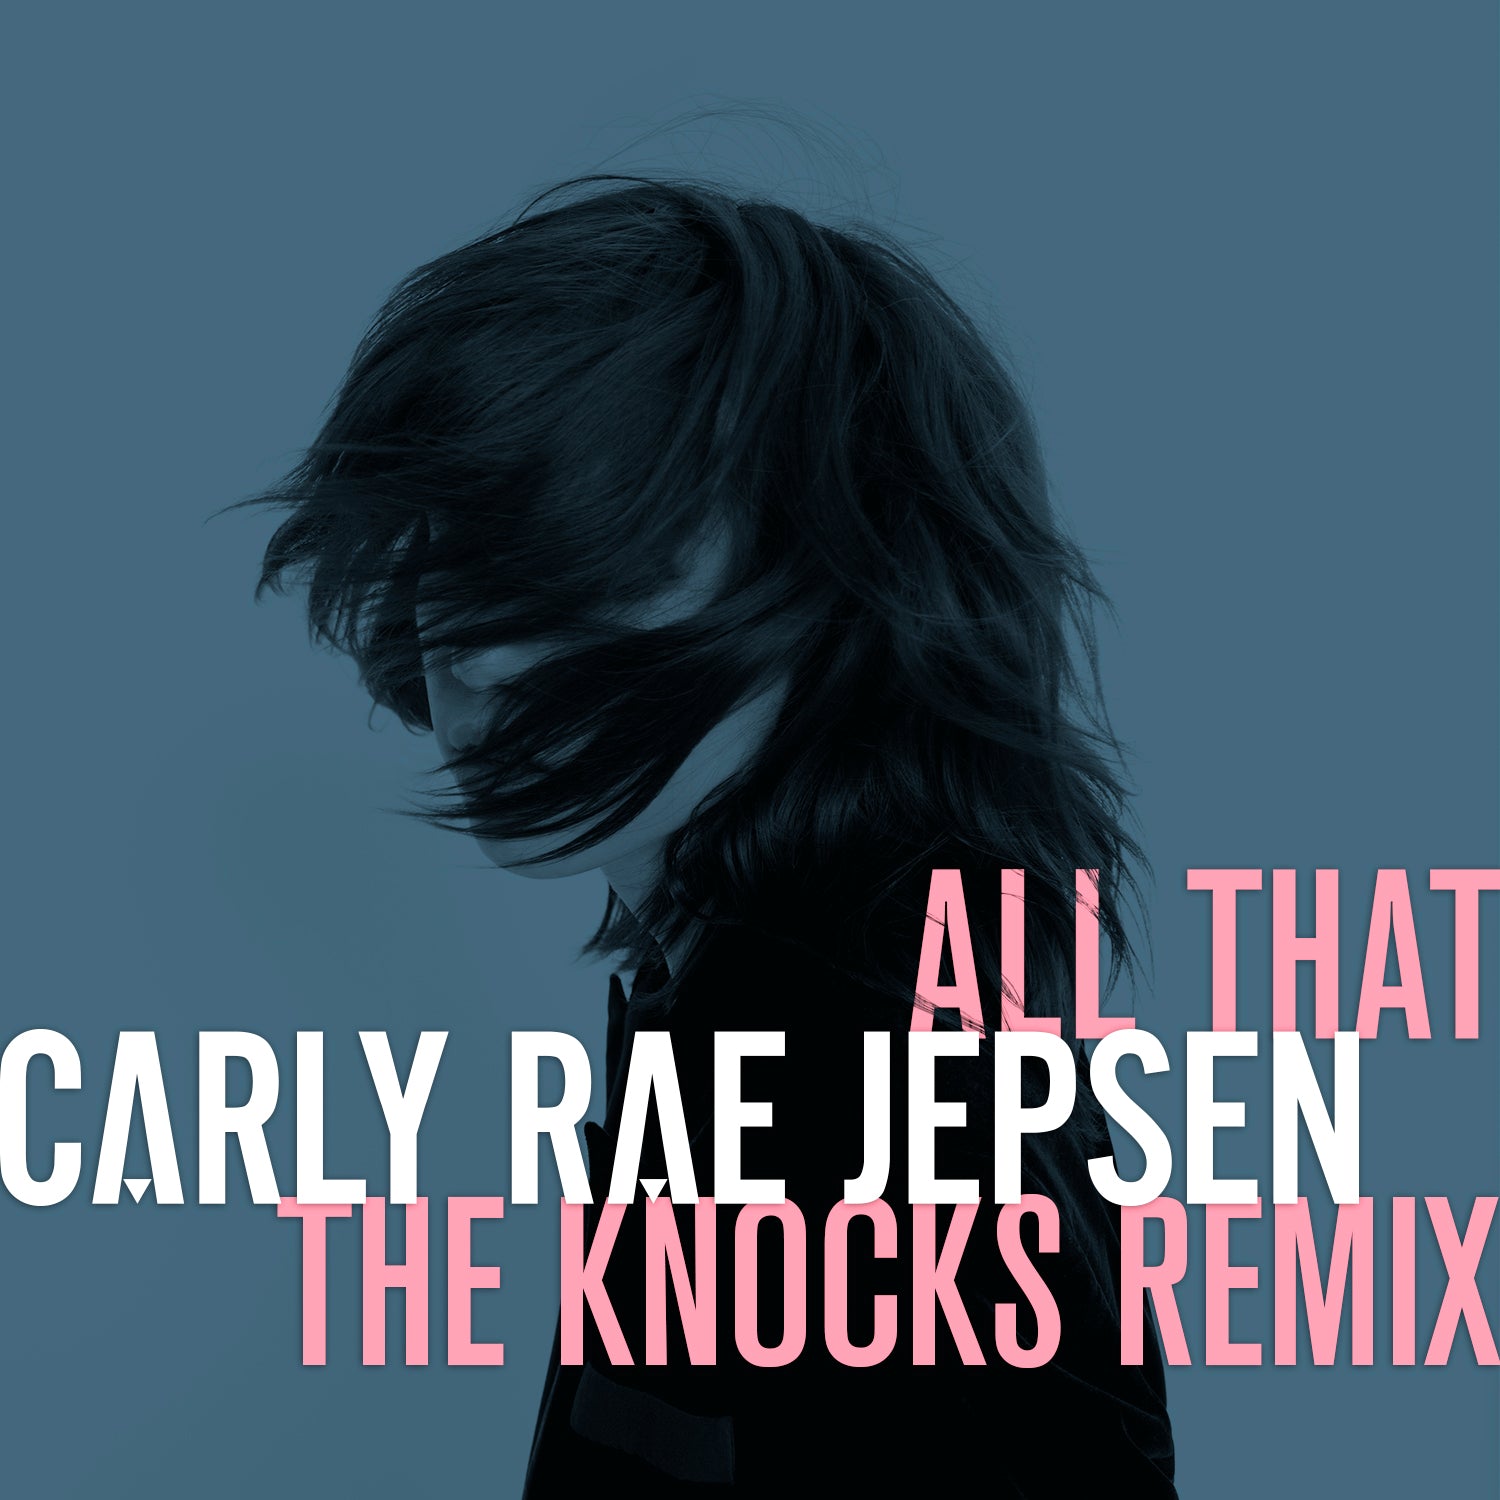 All That (Knocks Remix)